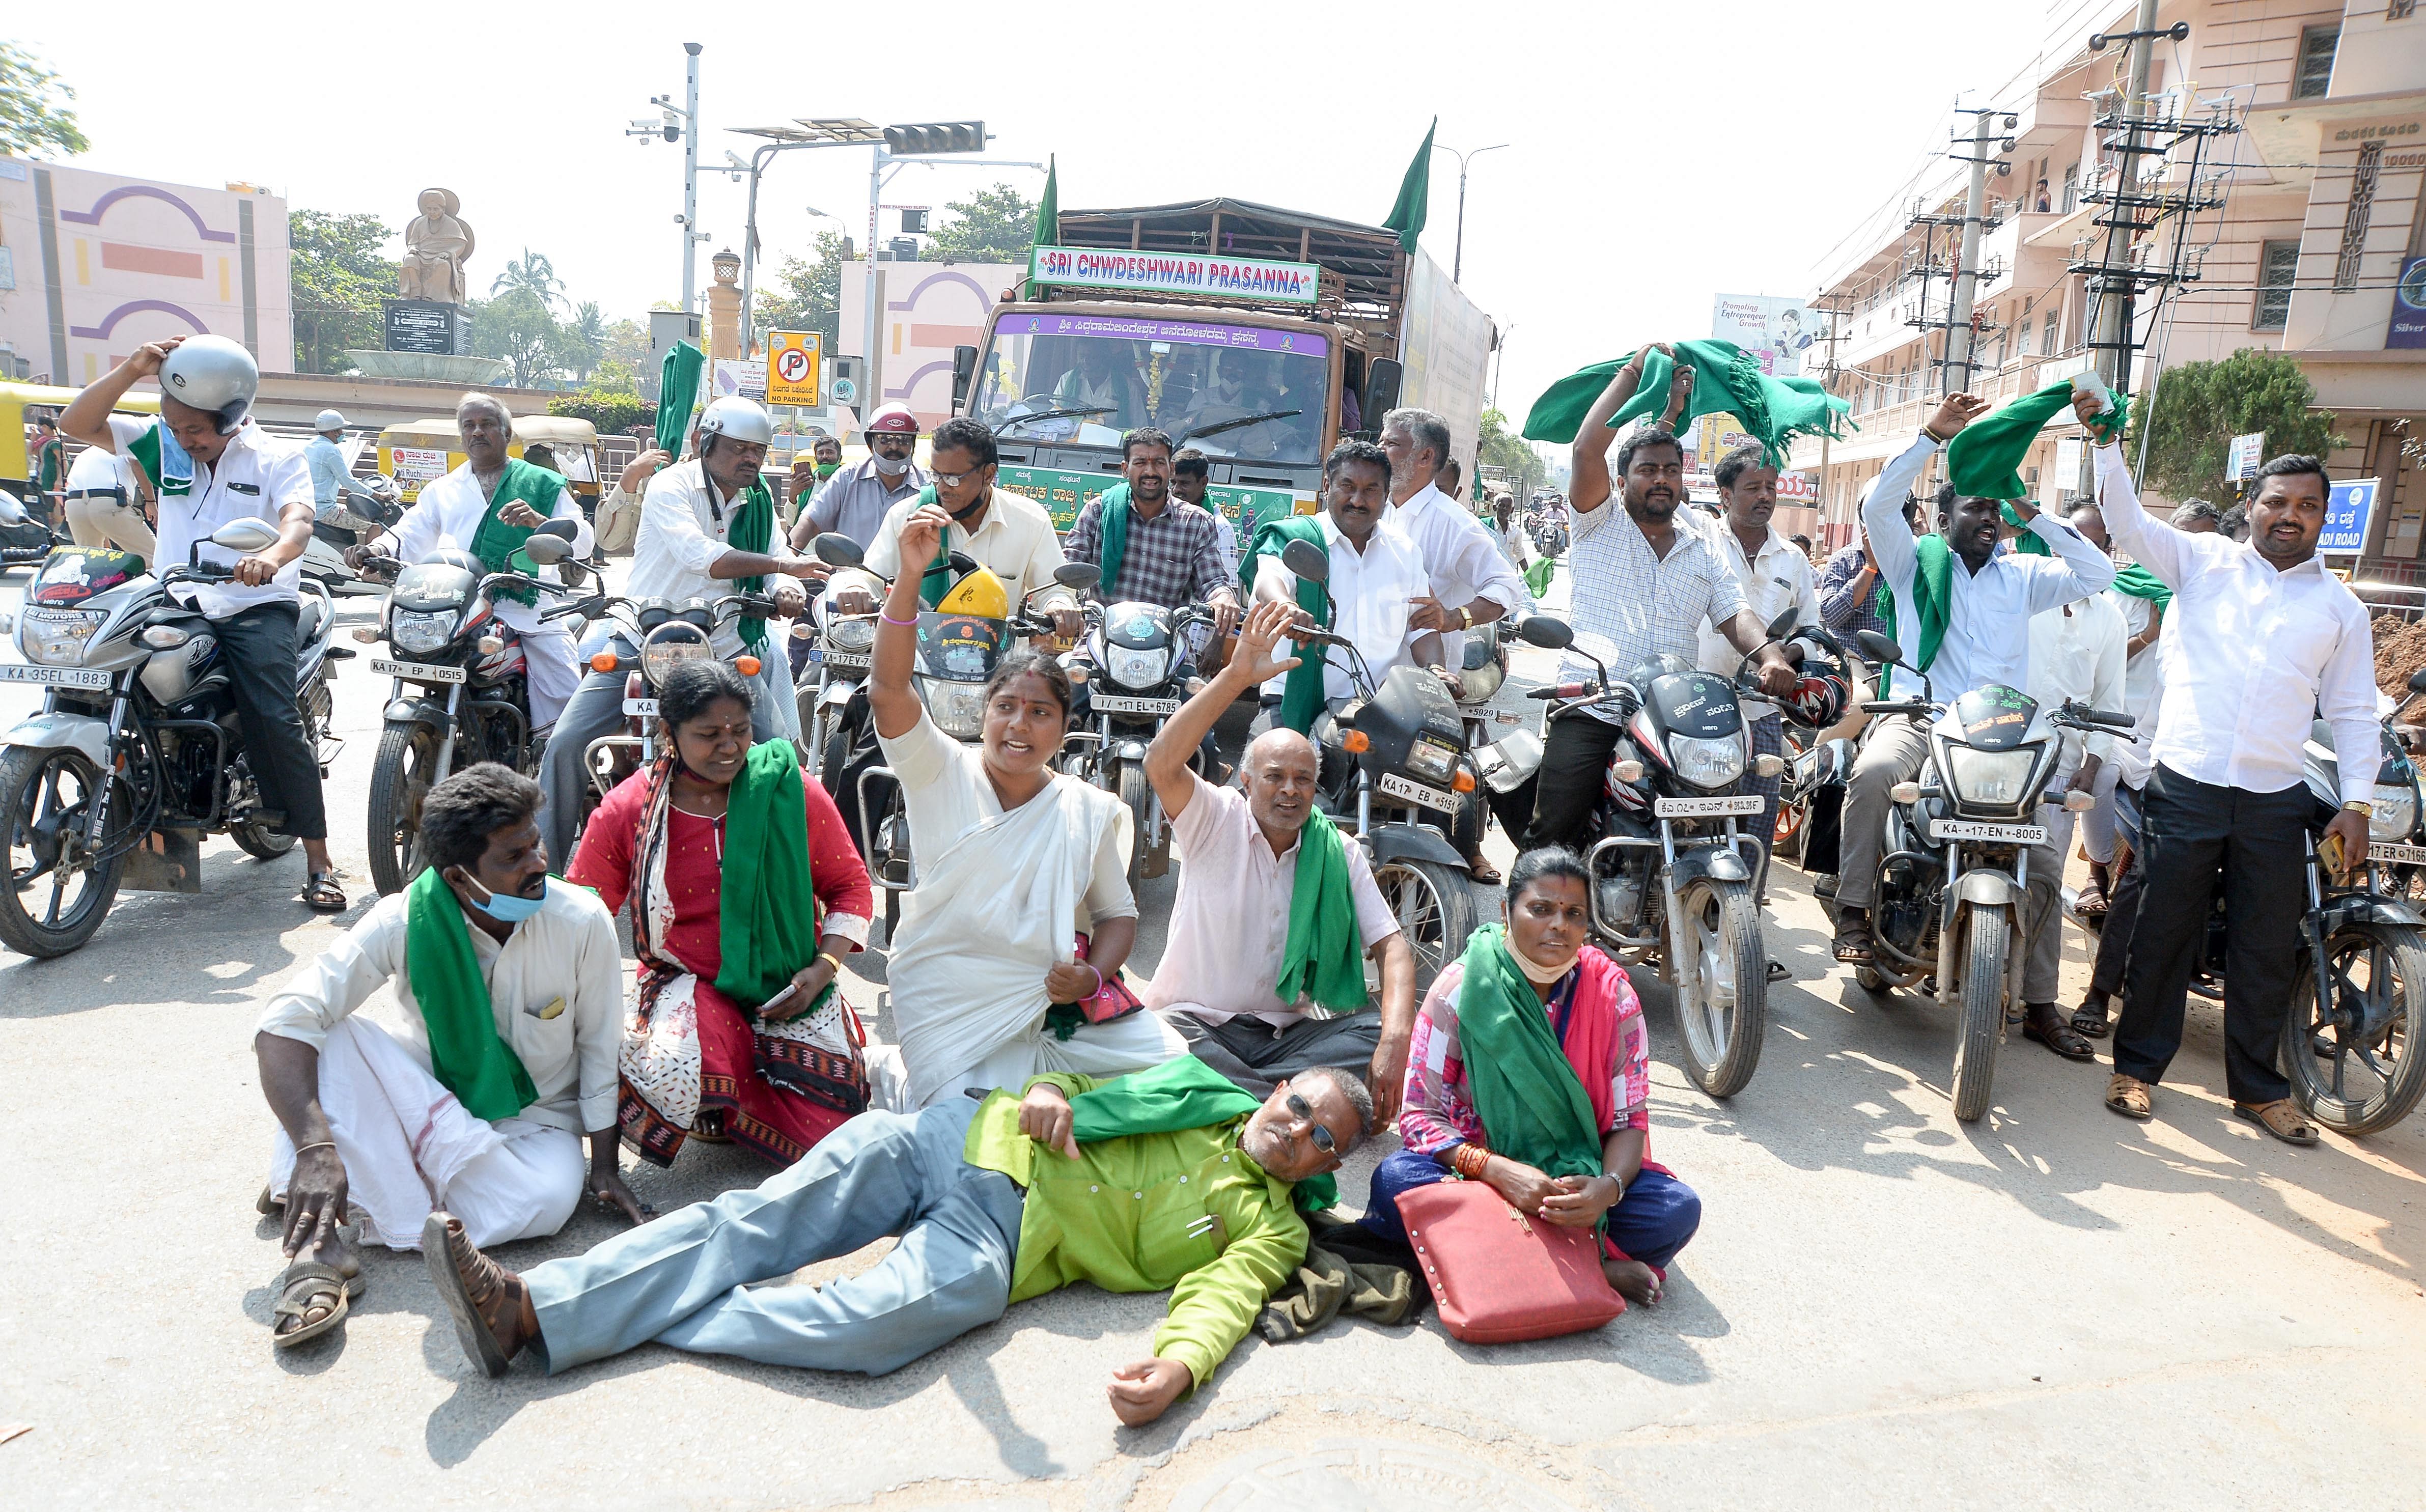 Farmers 'Movement as part of the Republic Day Parade in Delhi - Karnataka and Karnataka State Farmers' Union and Green Army Members held a bike rally at Jayadeva circle. Credit: Prajavani Photo